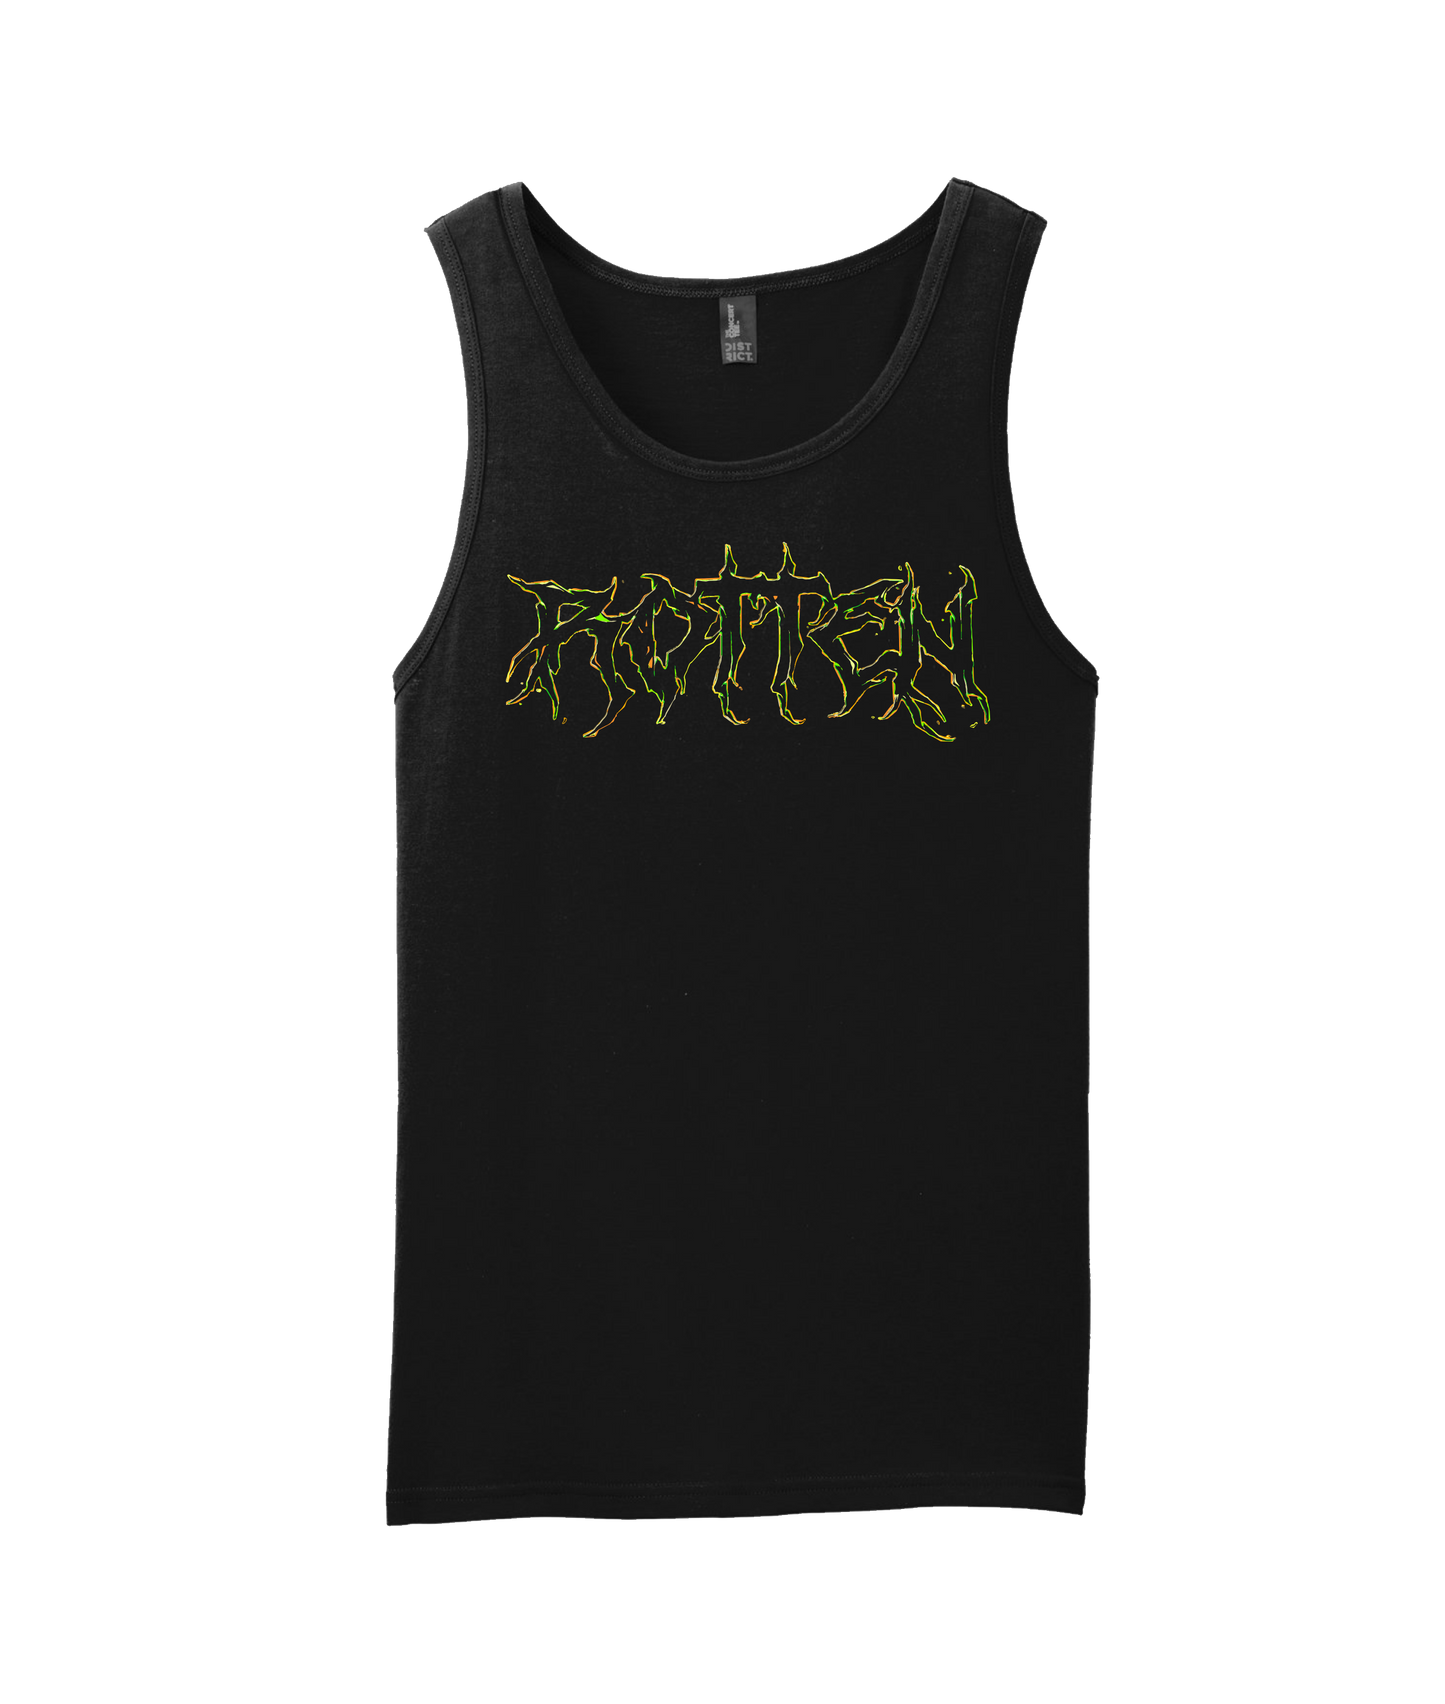 Rotten - Logo - Black Tank Top